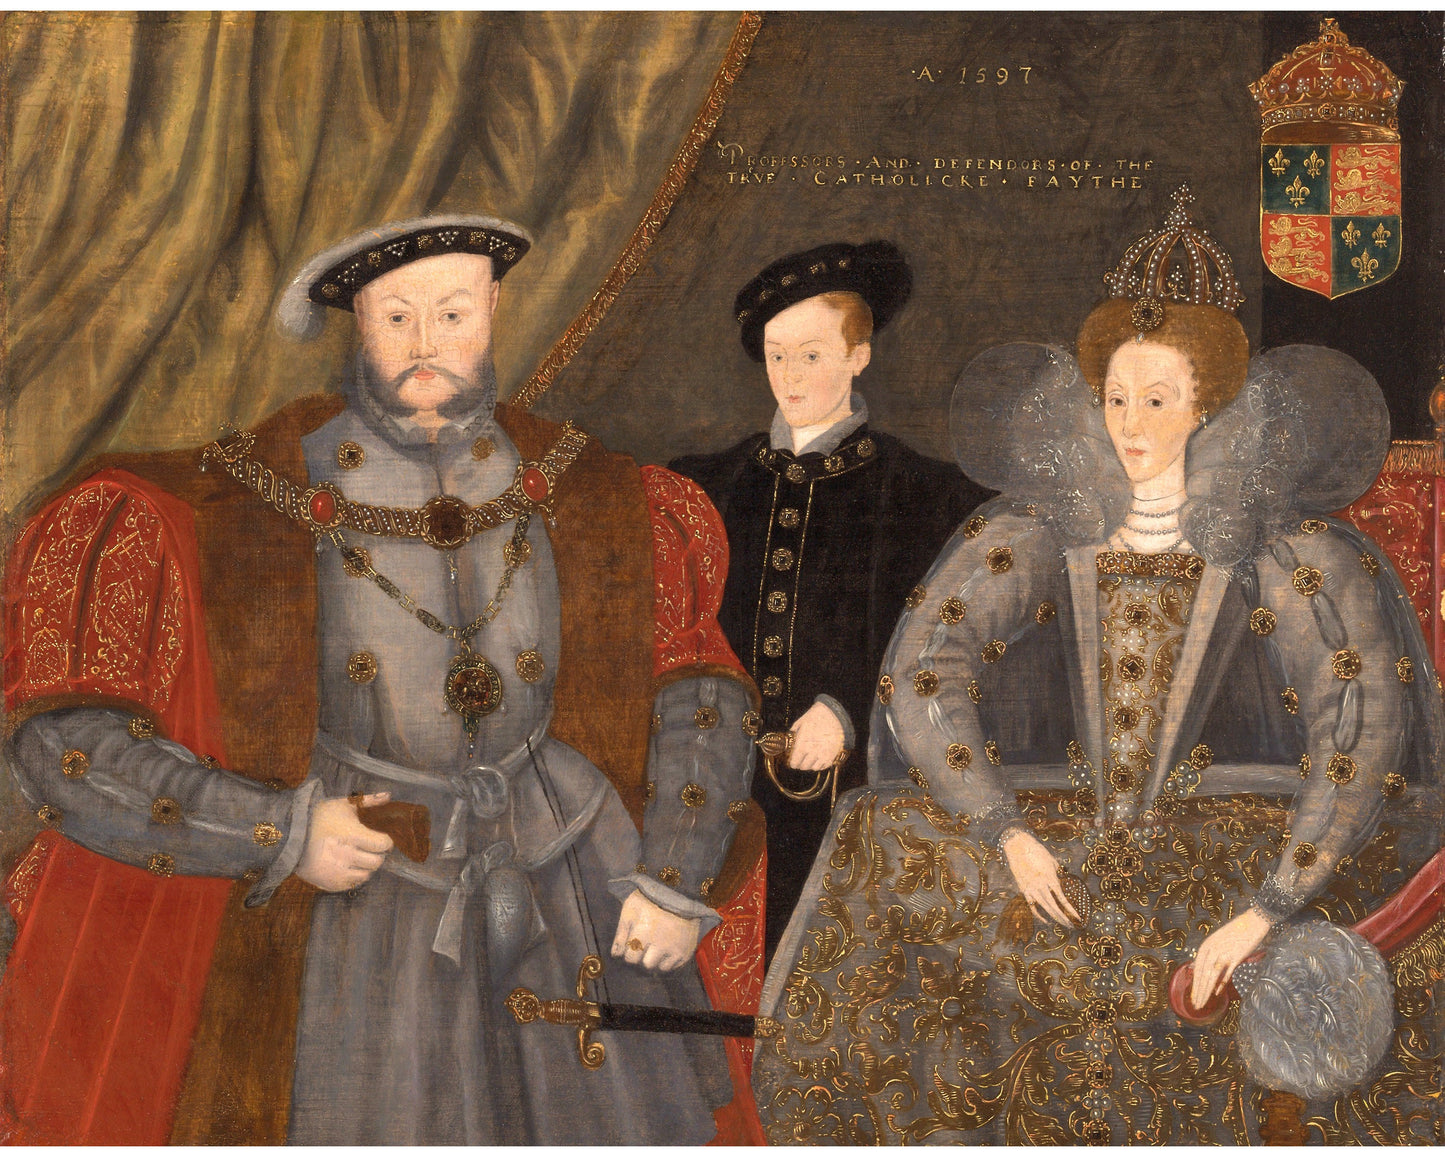 Antique Henry VIII, Elizabeth I portrait | Vintage fashion wall decor | 16th century art | Modern vintage décor | Ready to frame & gift